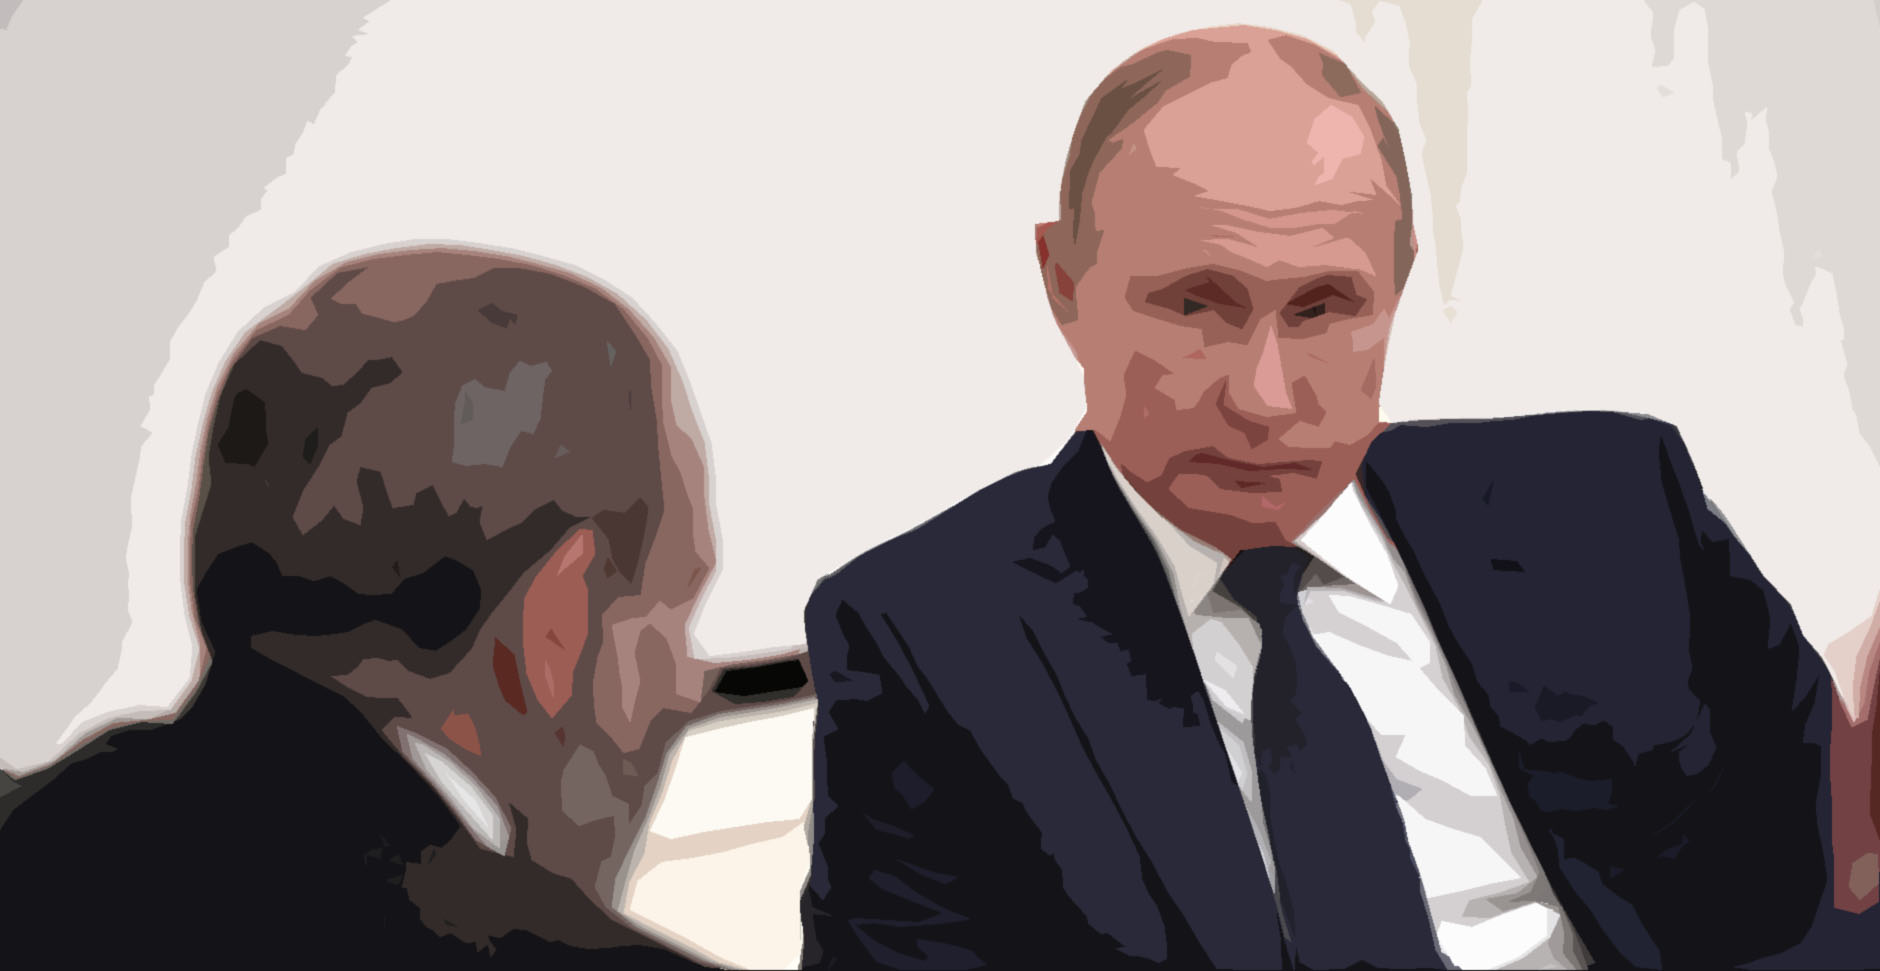 Putin Pashinyan бархатная революция бархатная революция